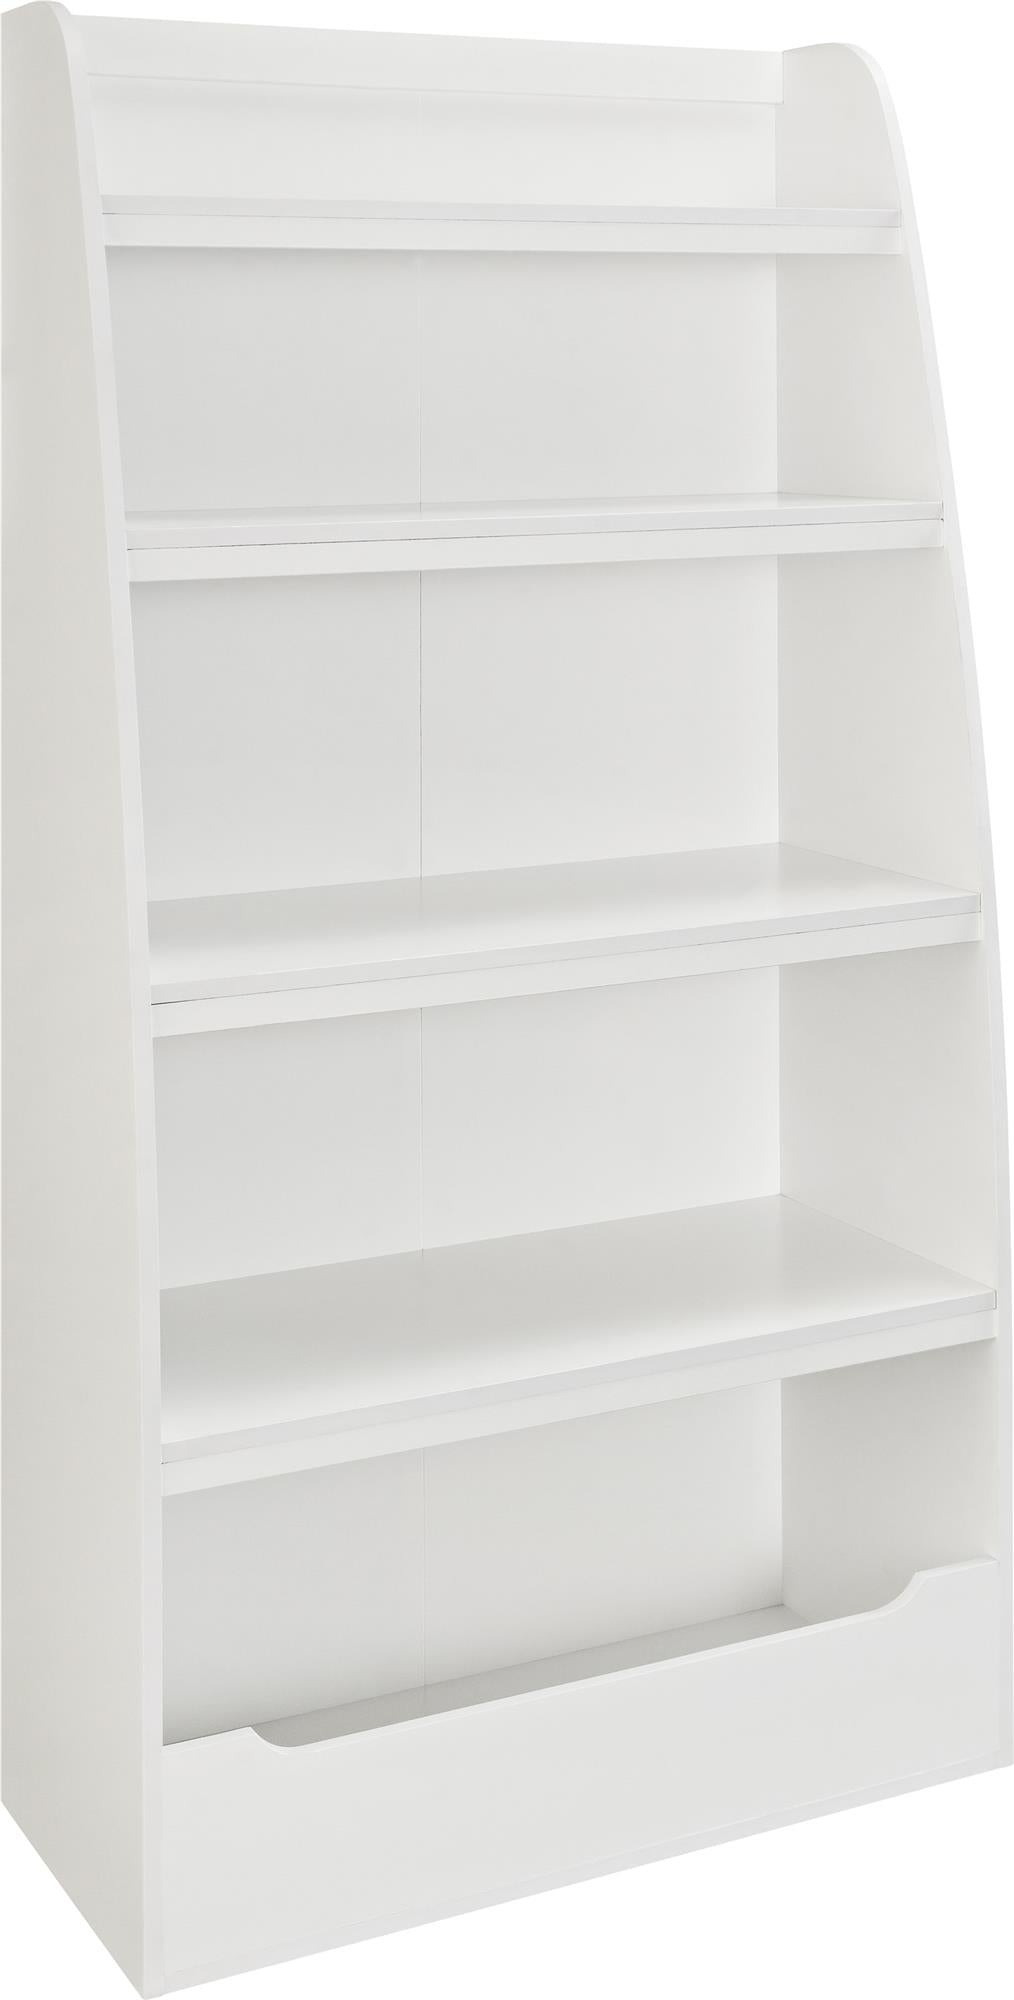 Essential bookcase with toy storage for kids -  Espresso